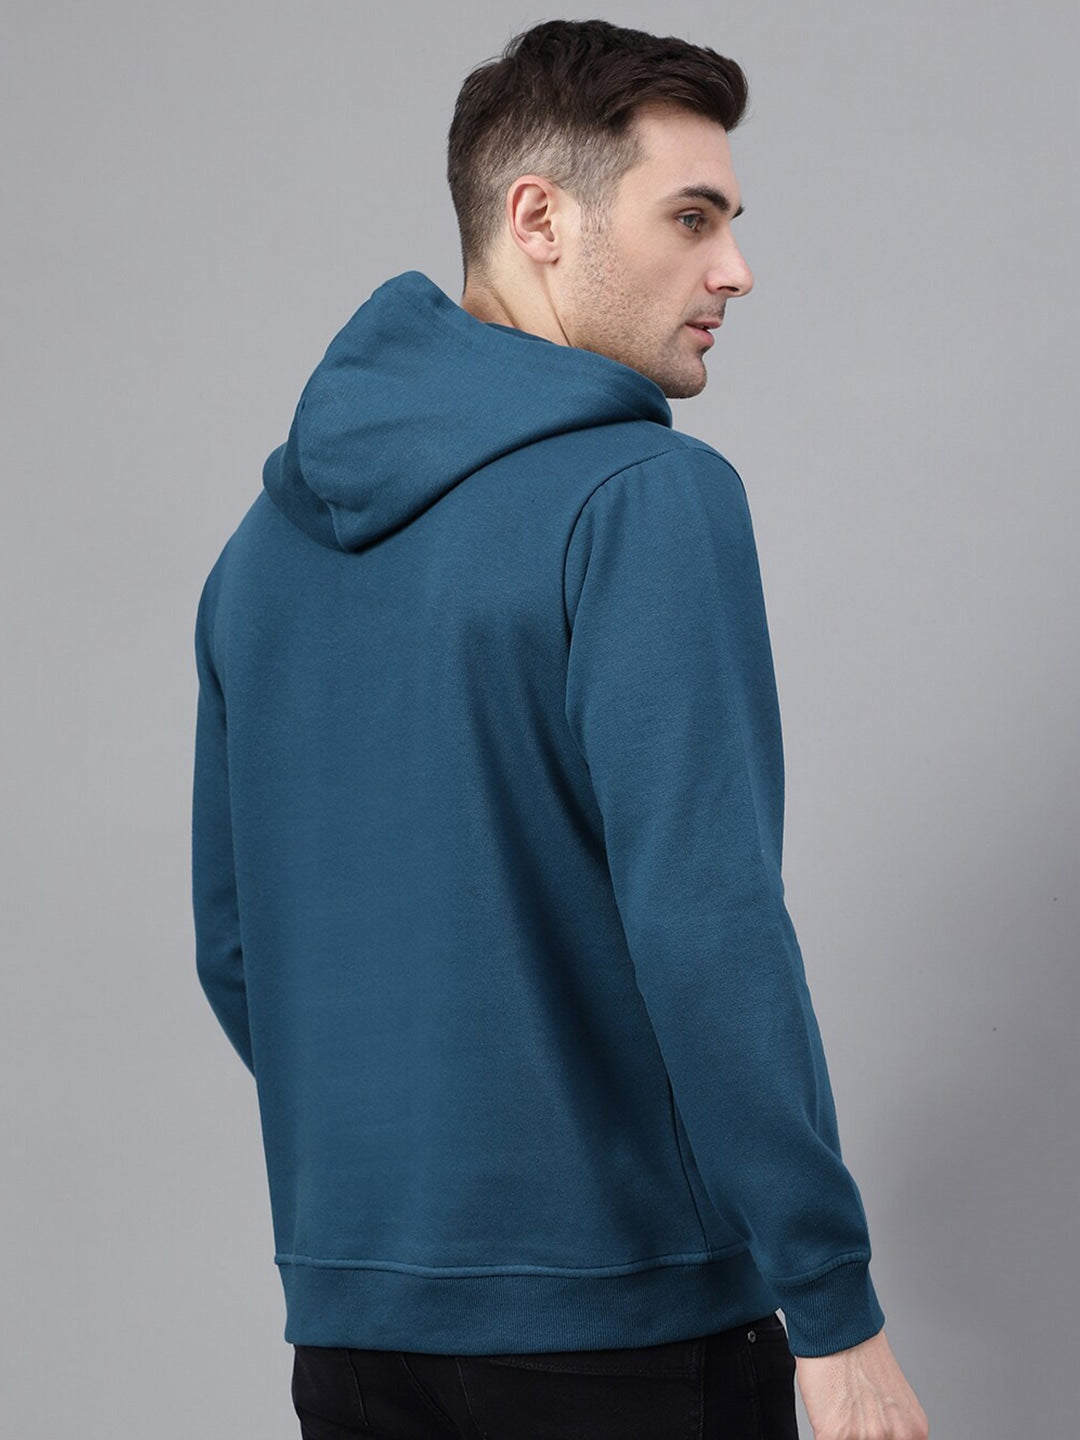 Men Turquoise Blue Solid Half Button Placket Long Sleeves Fleece Hooded Sweatshirt